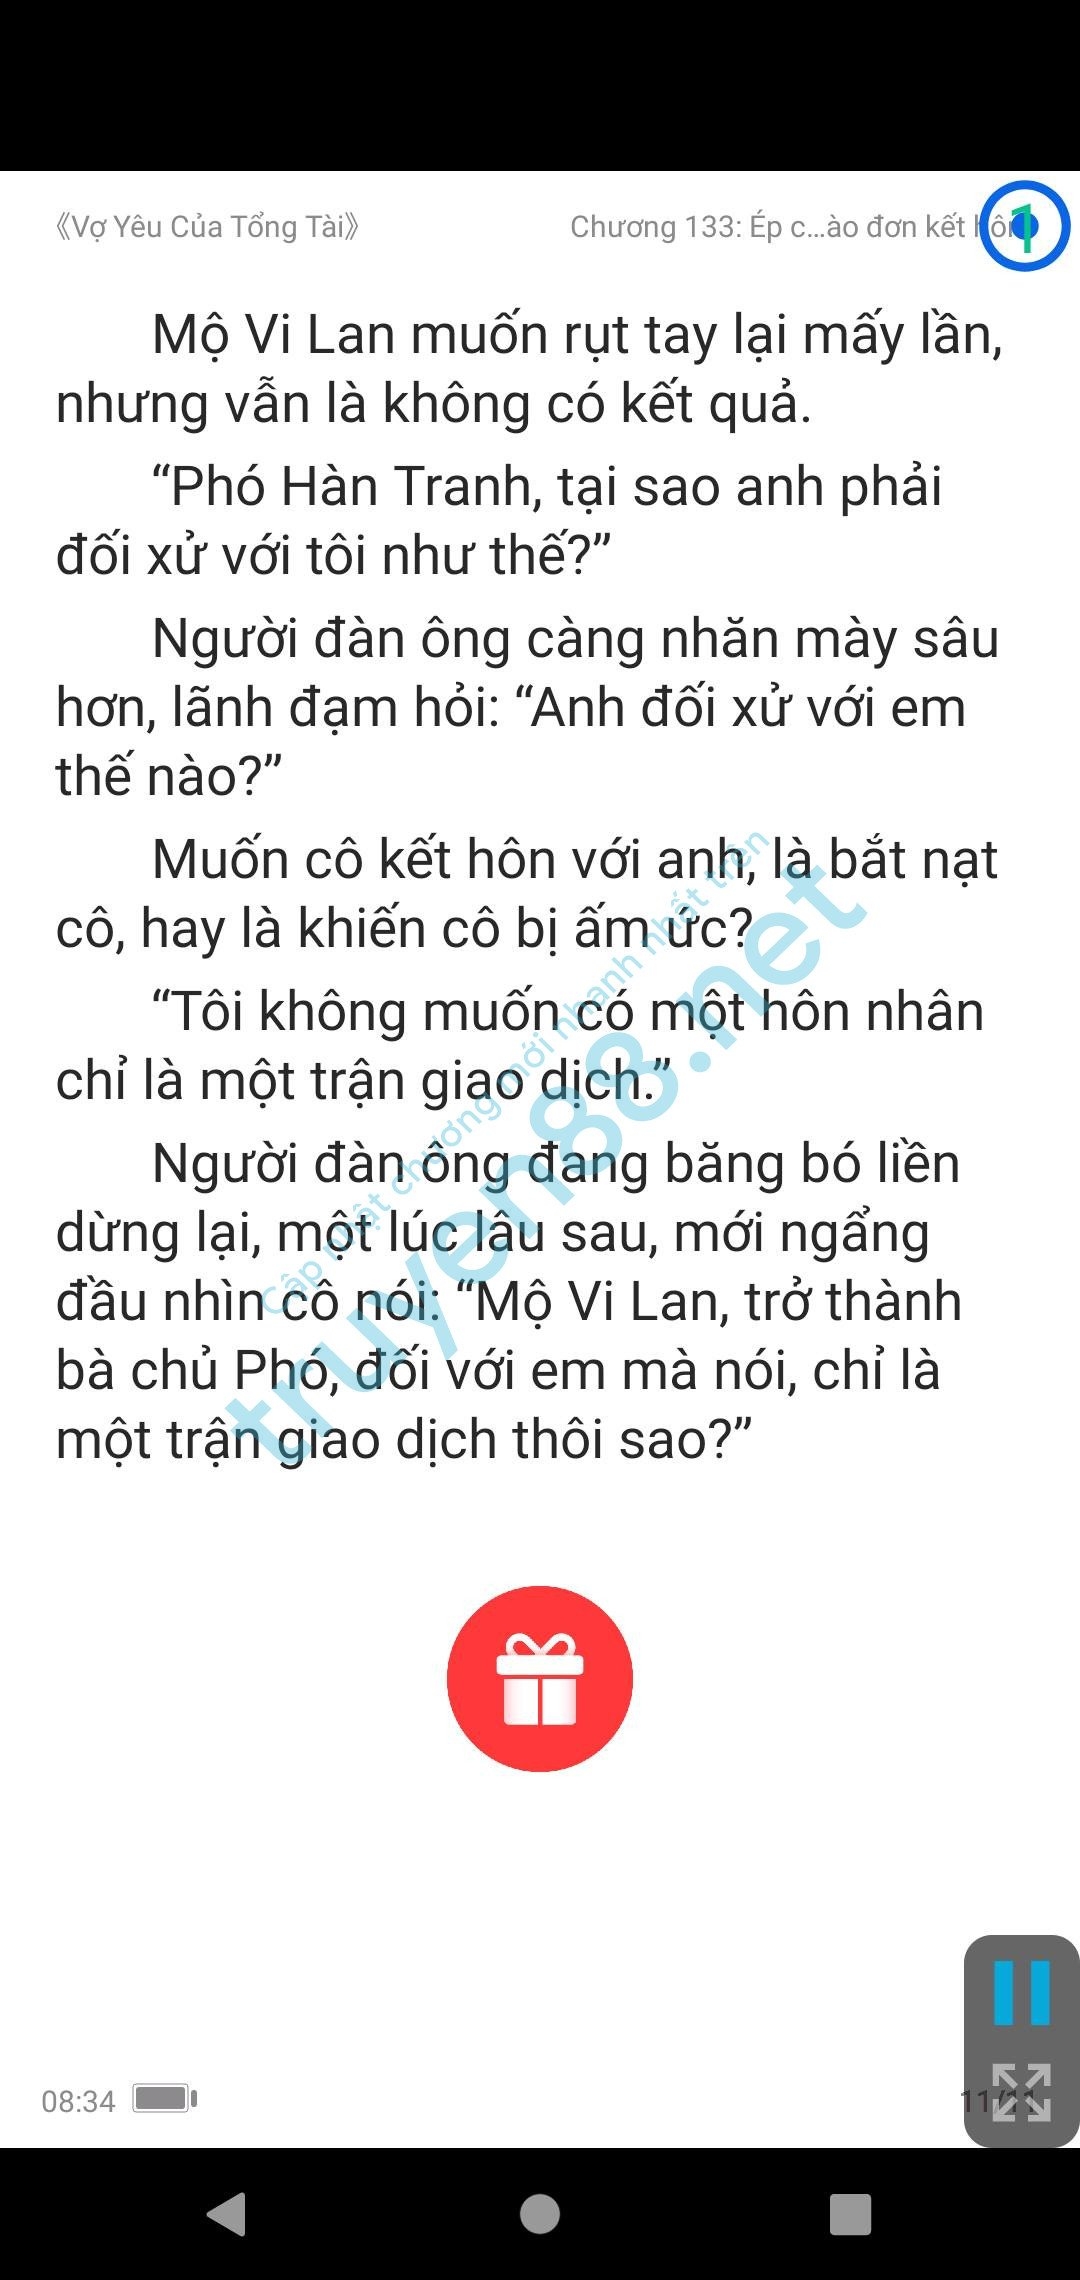 vo-yeu-cua-tong-tai-mo-vi-lan--pho-han-tranh-133-3